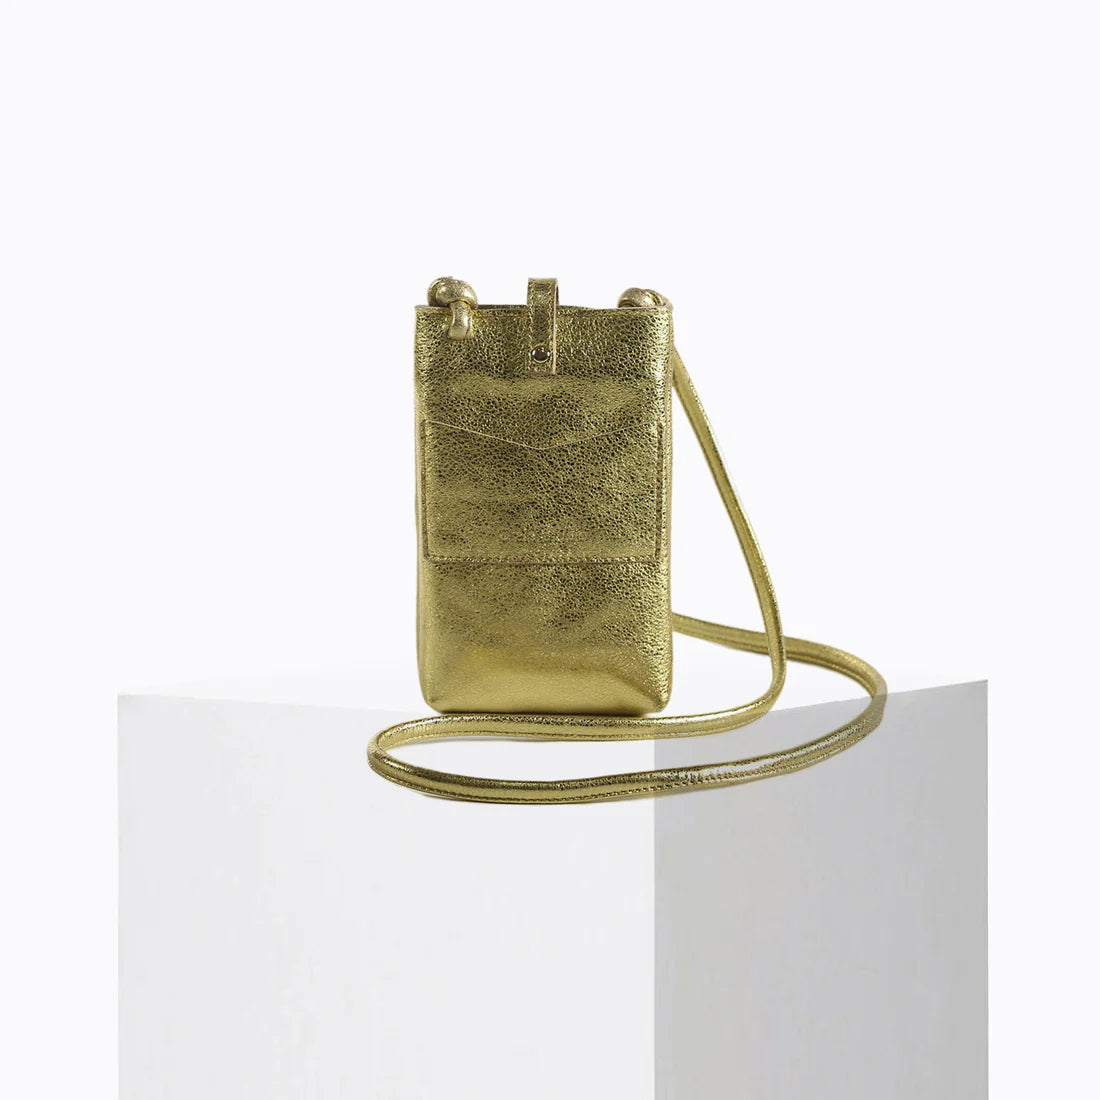 Grigri Leather Phone Bag - Gold